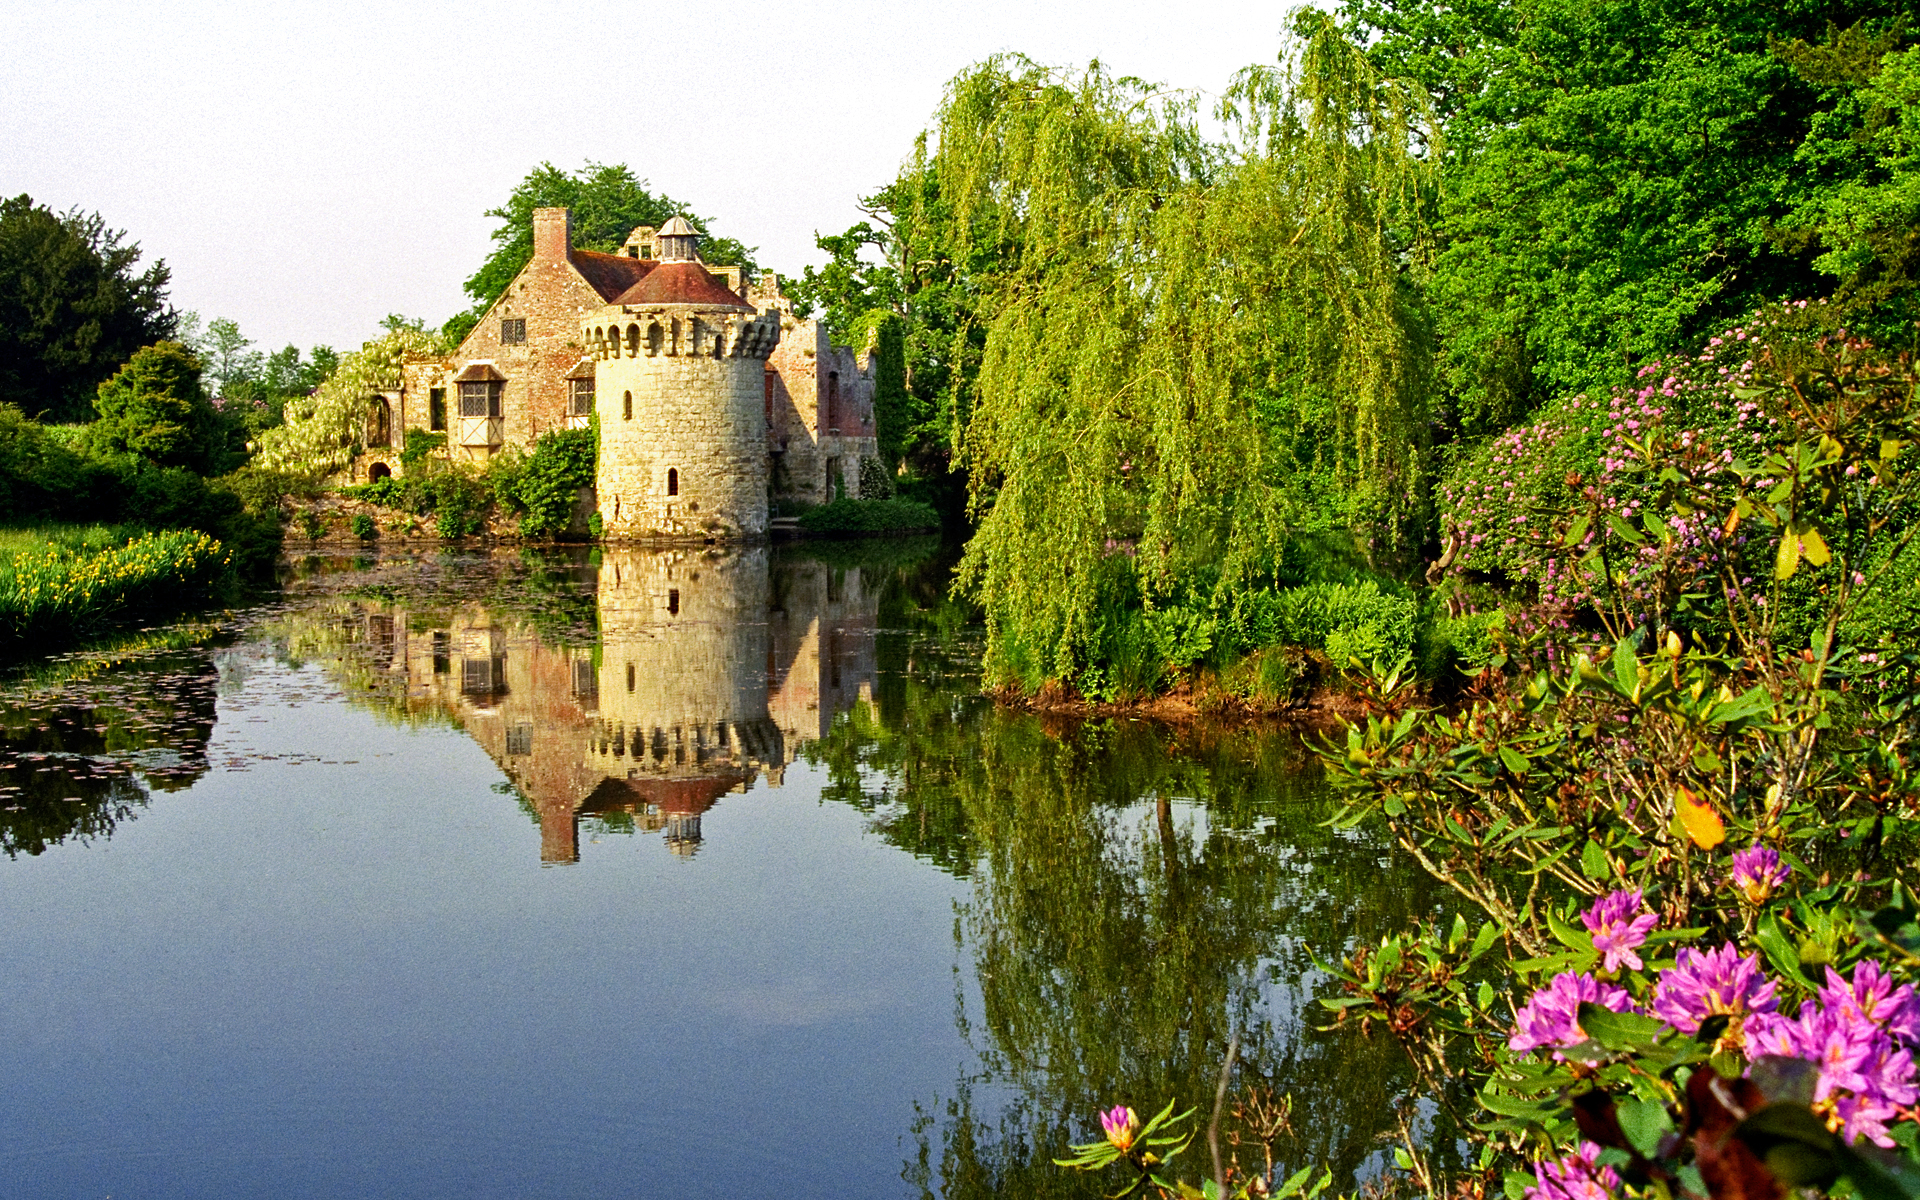 Scotney Castle Landscape Gardens, Kent, England | View of medieval